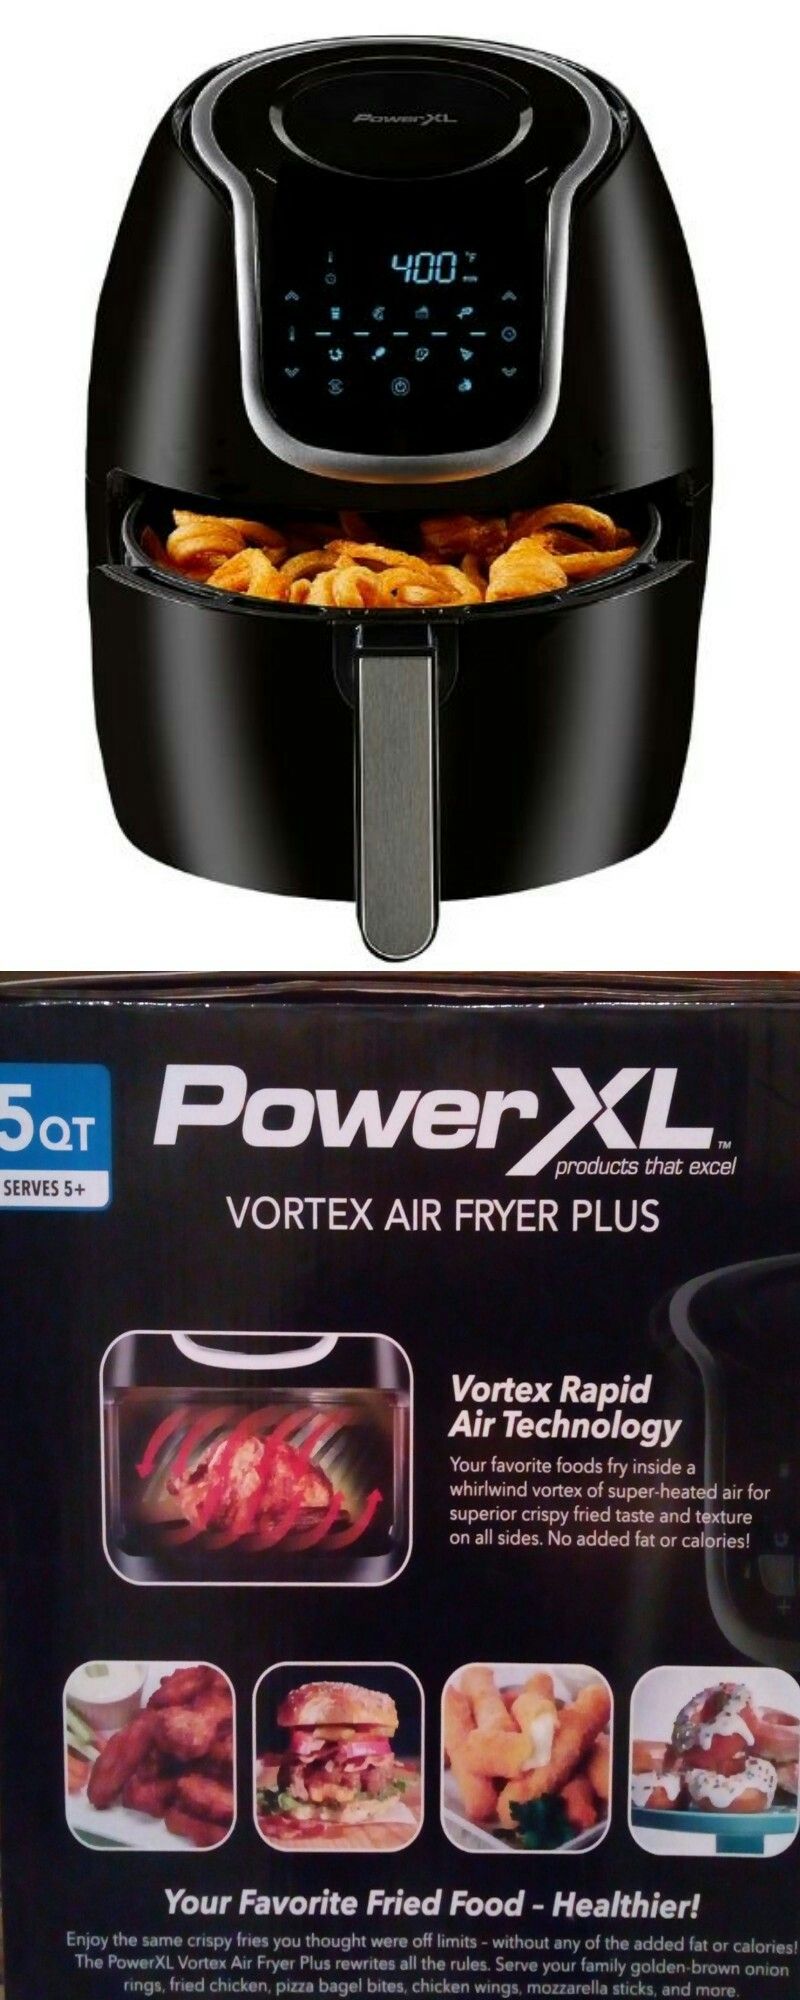 PowerXL 5QT Vortex Air Fryer Brand New in Box